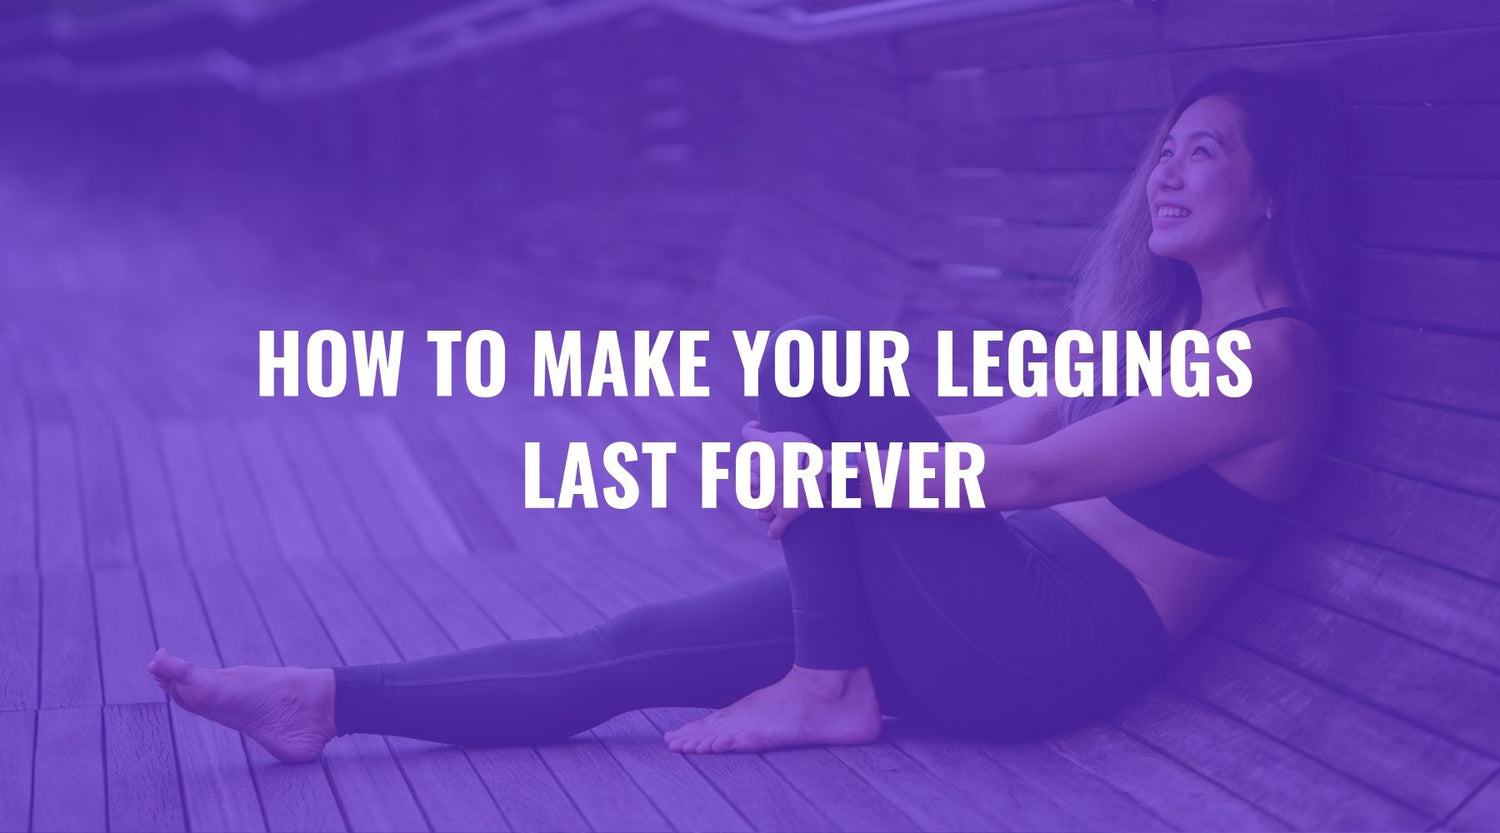 How to Make Your Leggings Last Forever